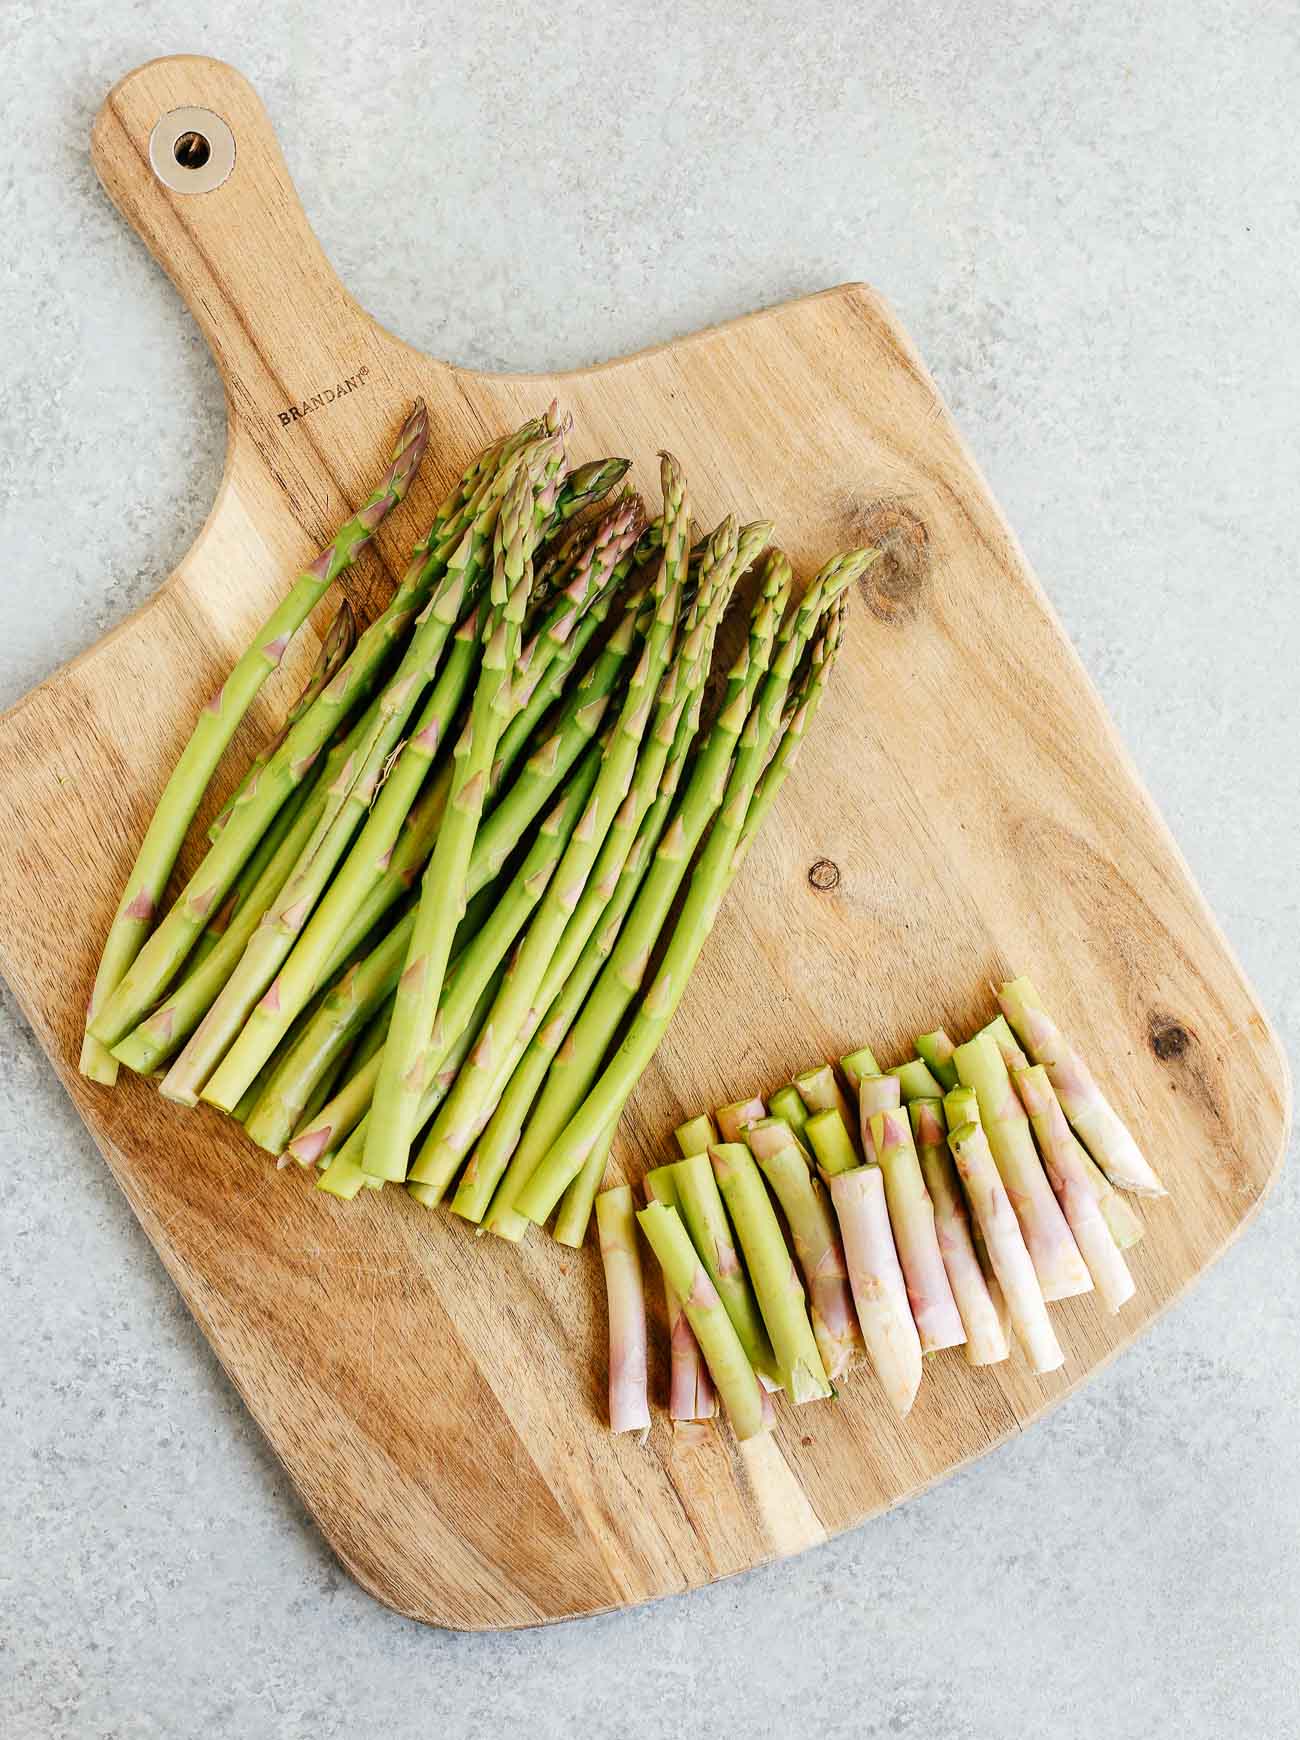 Cutting asparagus' tips off.